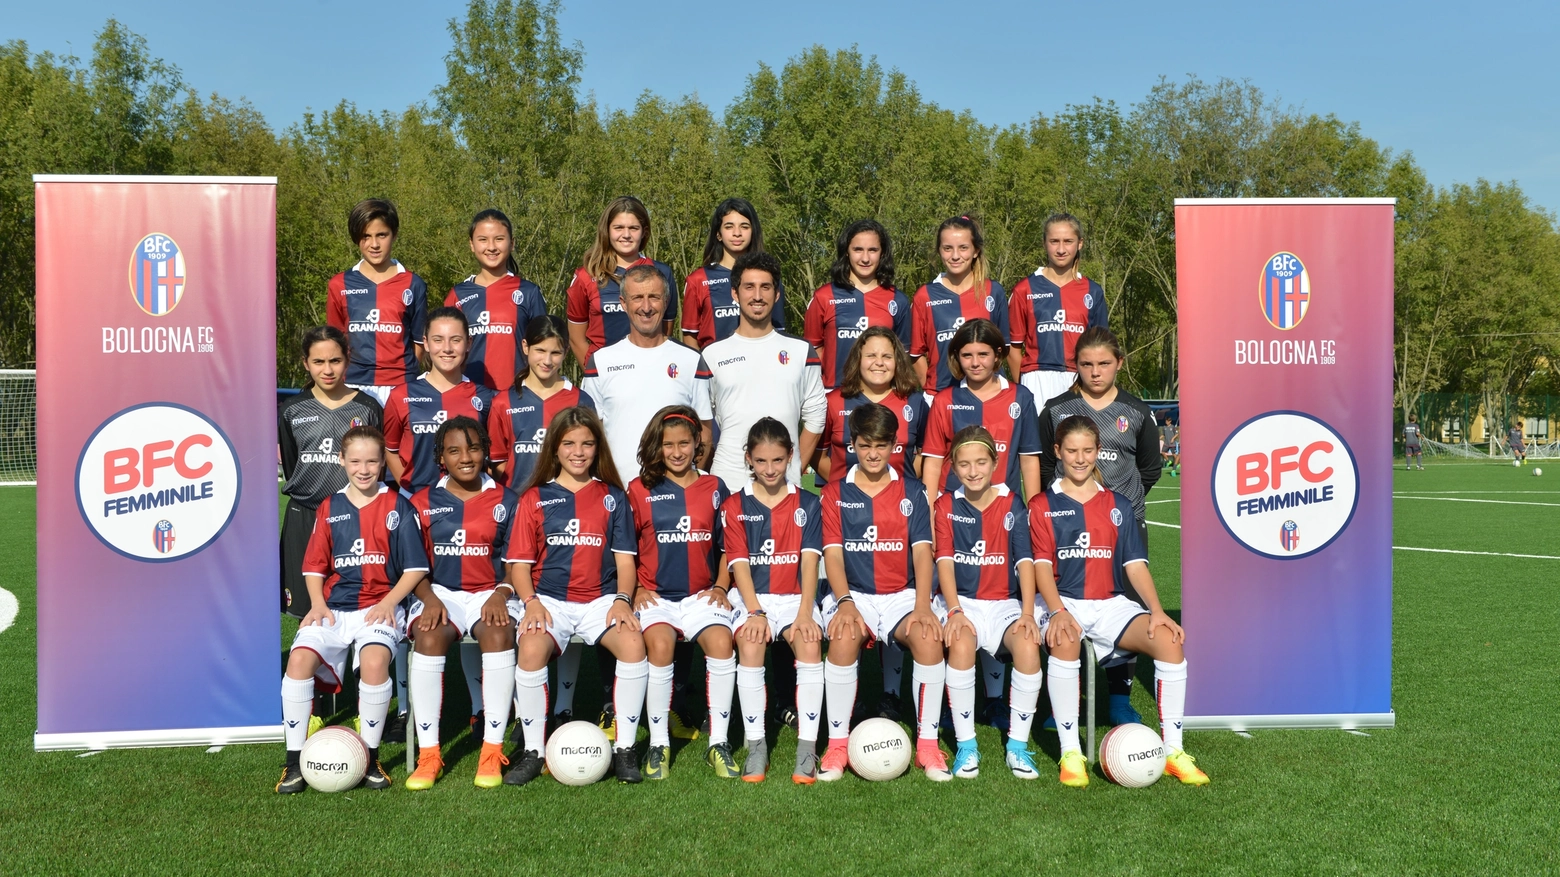 Bologna FC Femminile